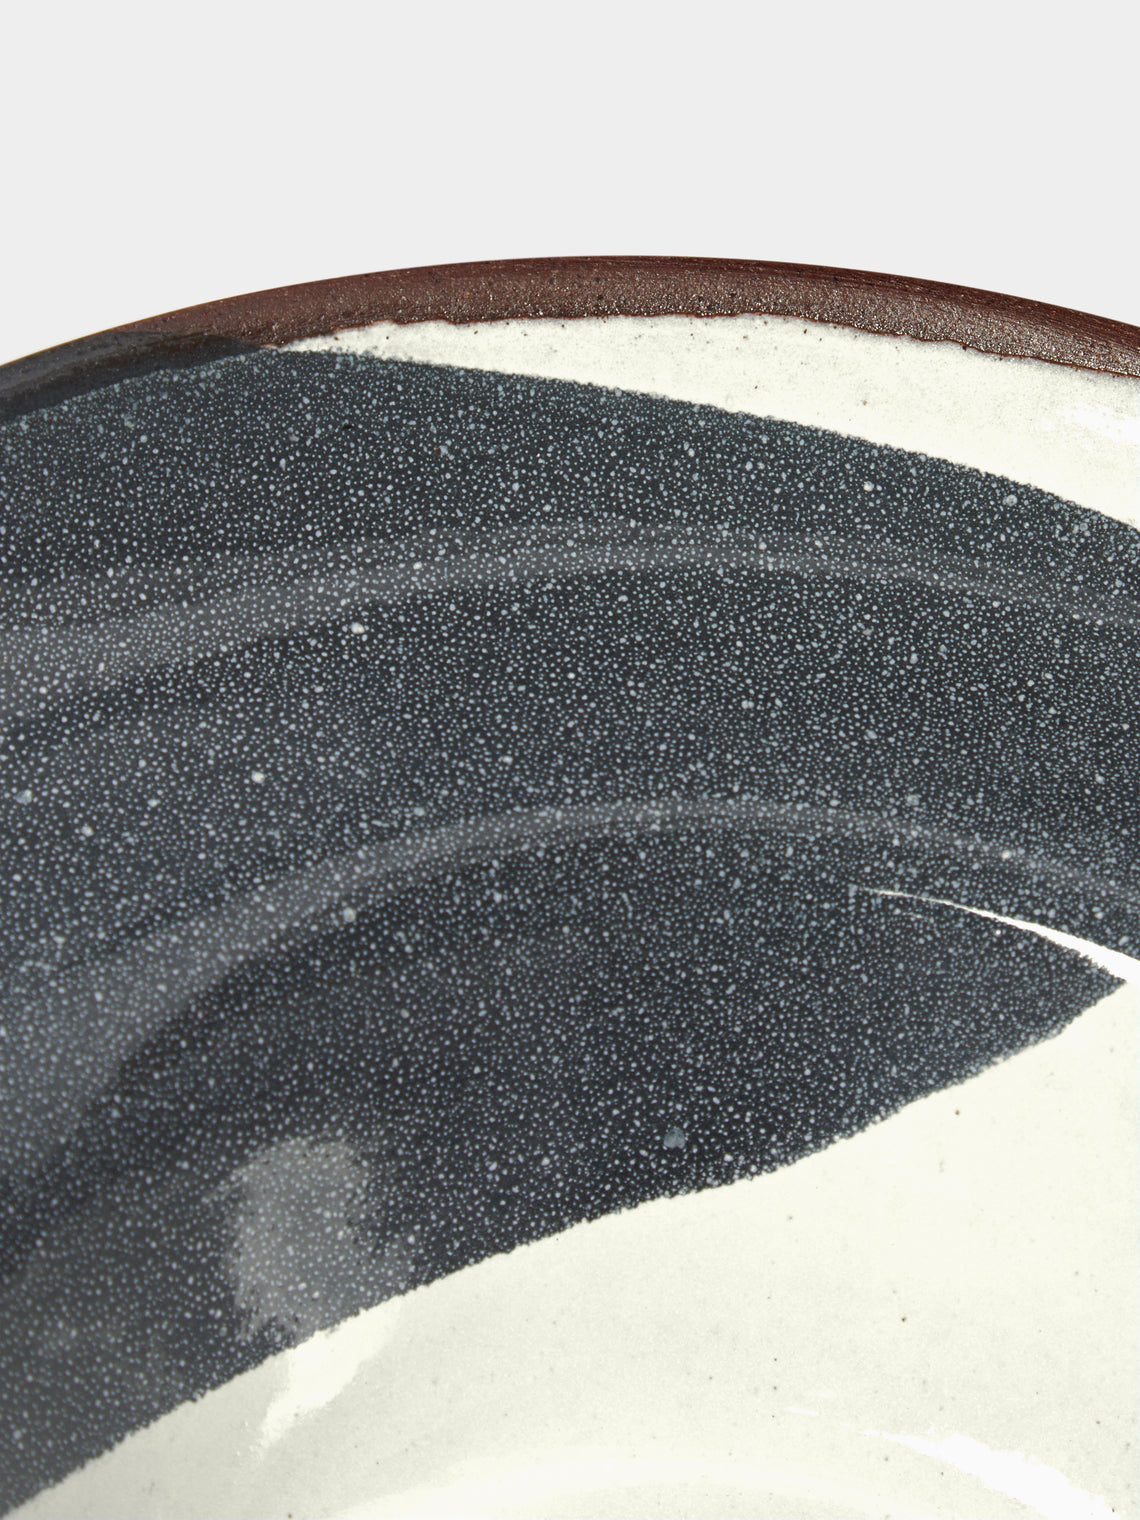 Silvia K Ceramics - Hand-Glazed Terracotta Large Rimmed Bowls (Set of 4) -  - ABASK